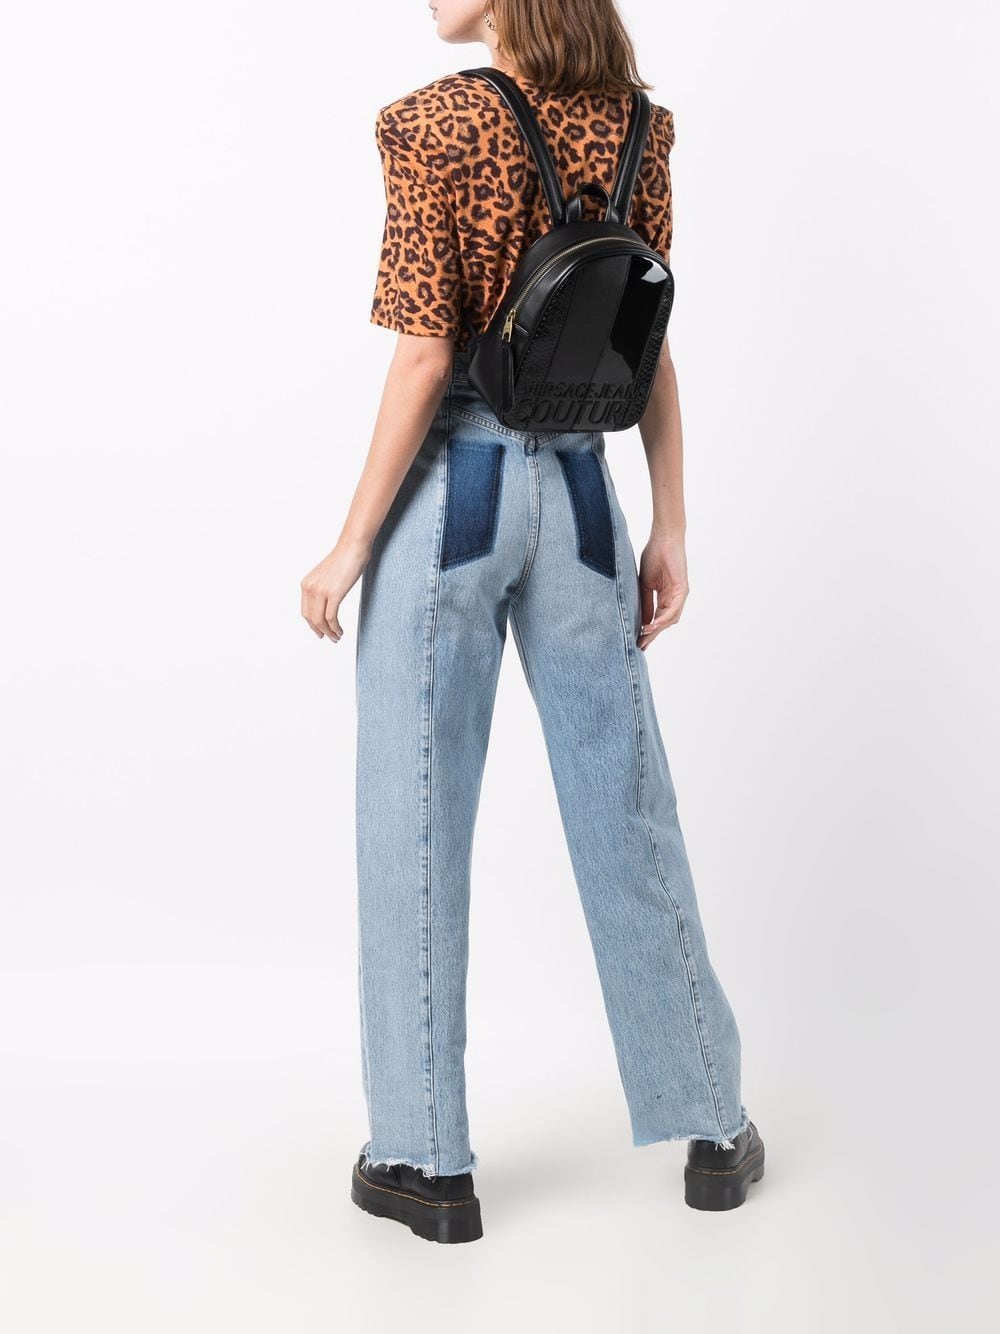 фото Versace jeans couture рюкзак с тиснением под кожу крокодила